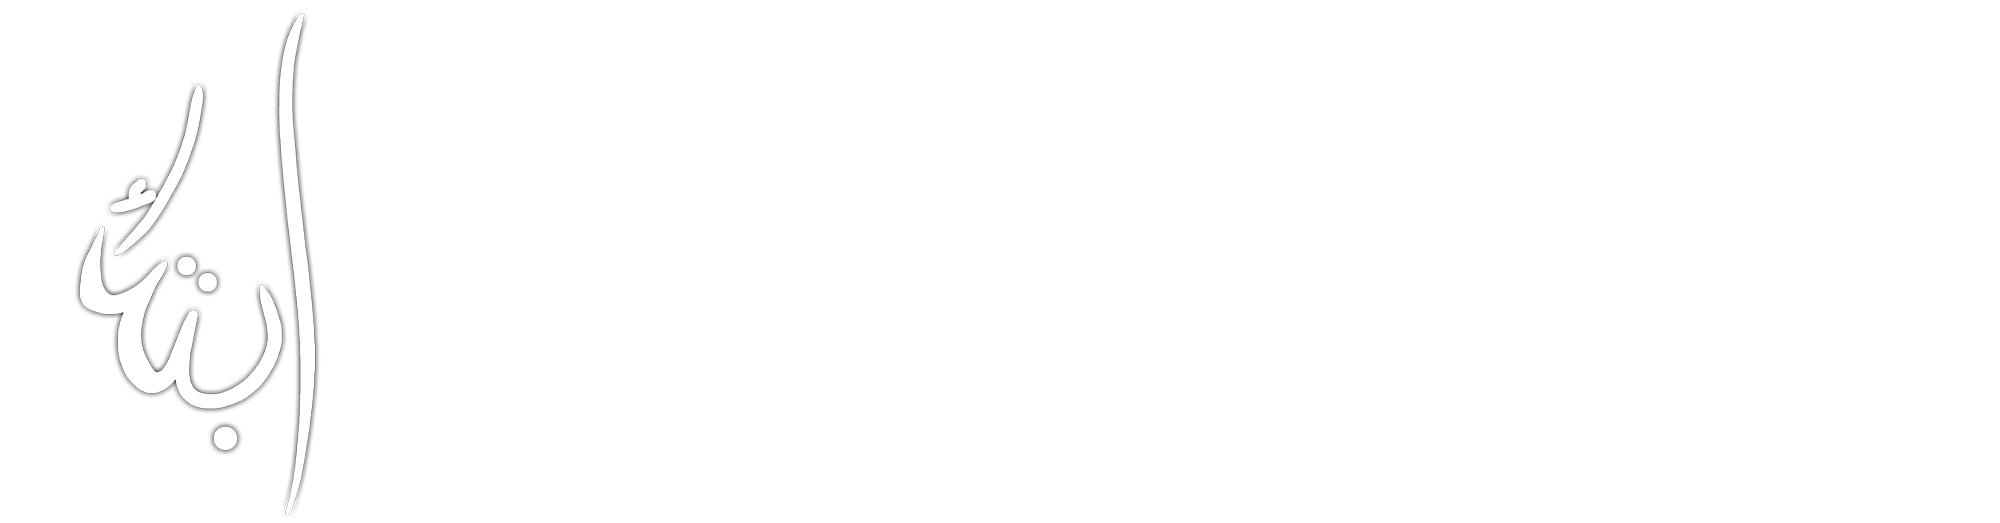 Ibtidah for Education